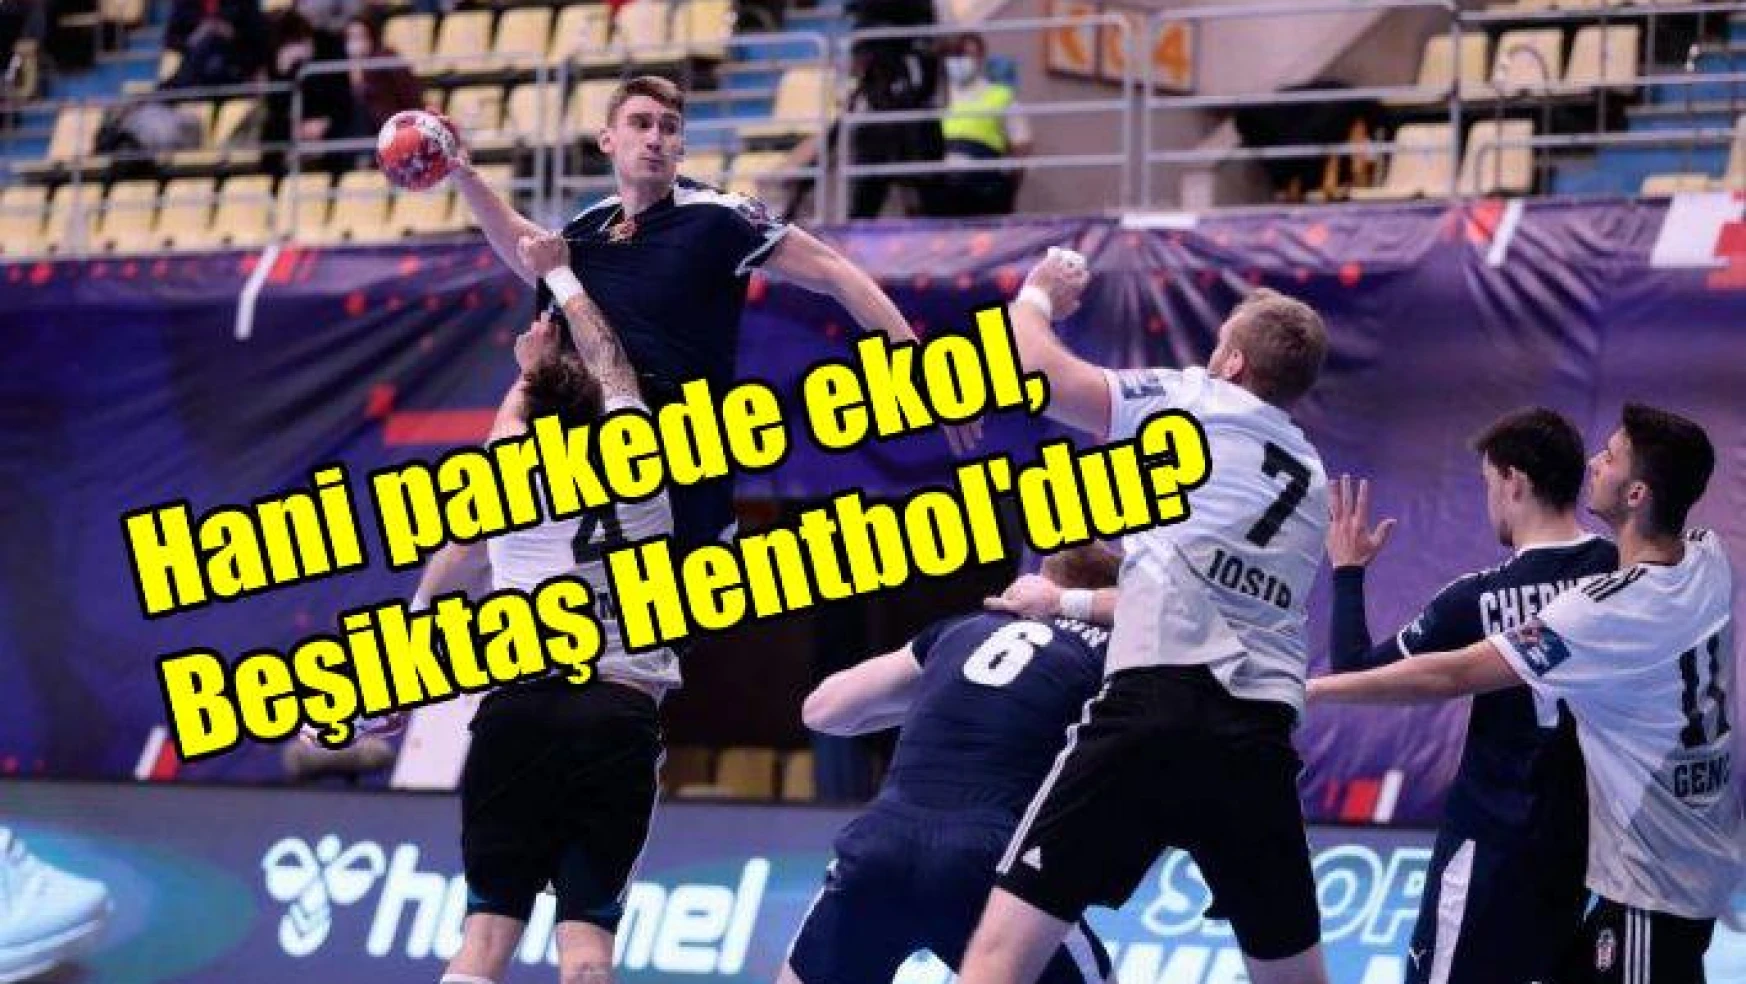 'Hani parkede ekol, Beşiktaş Hentbol’du?'